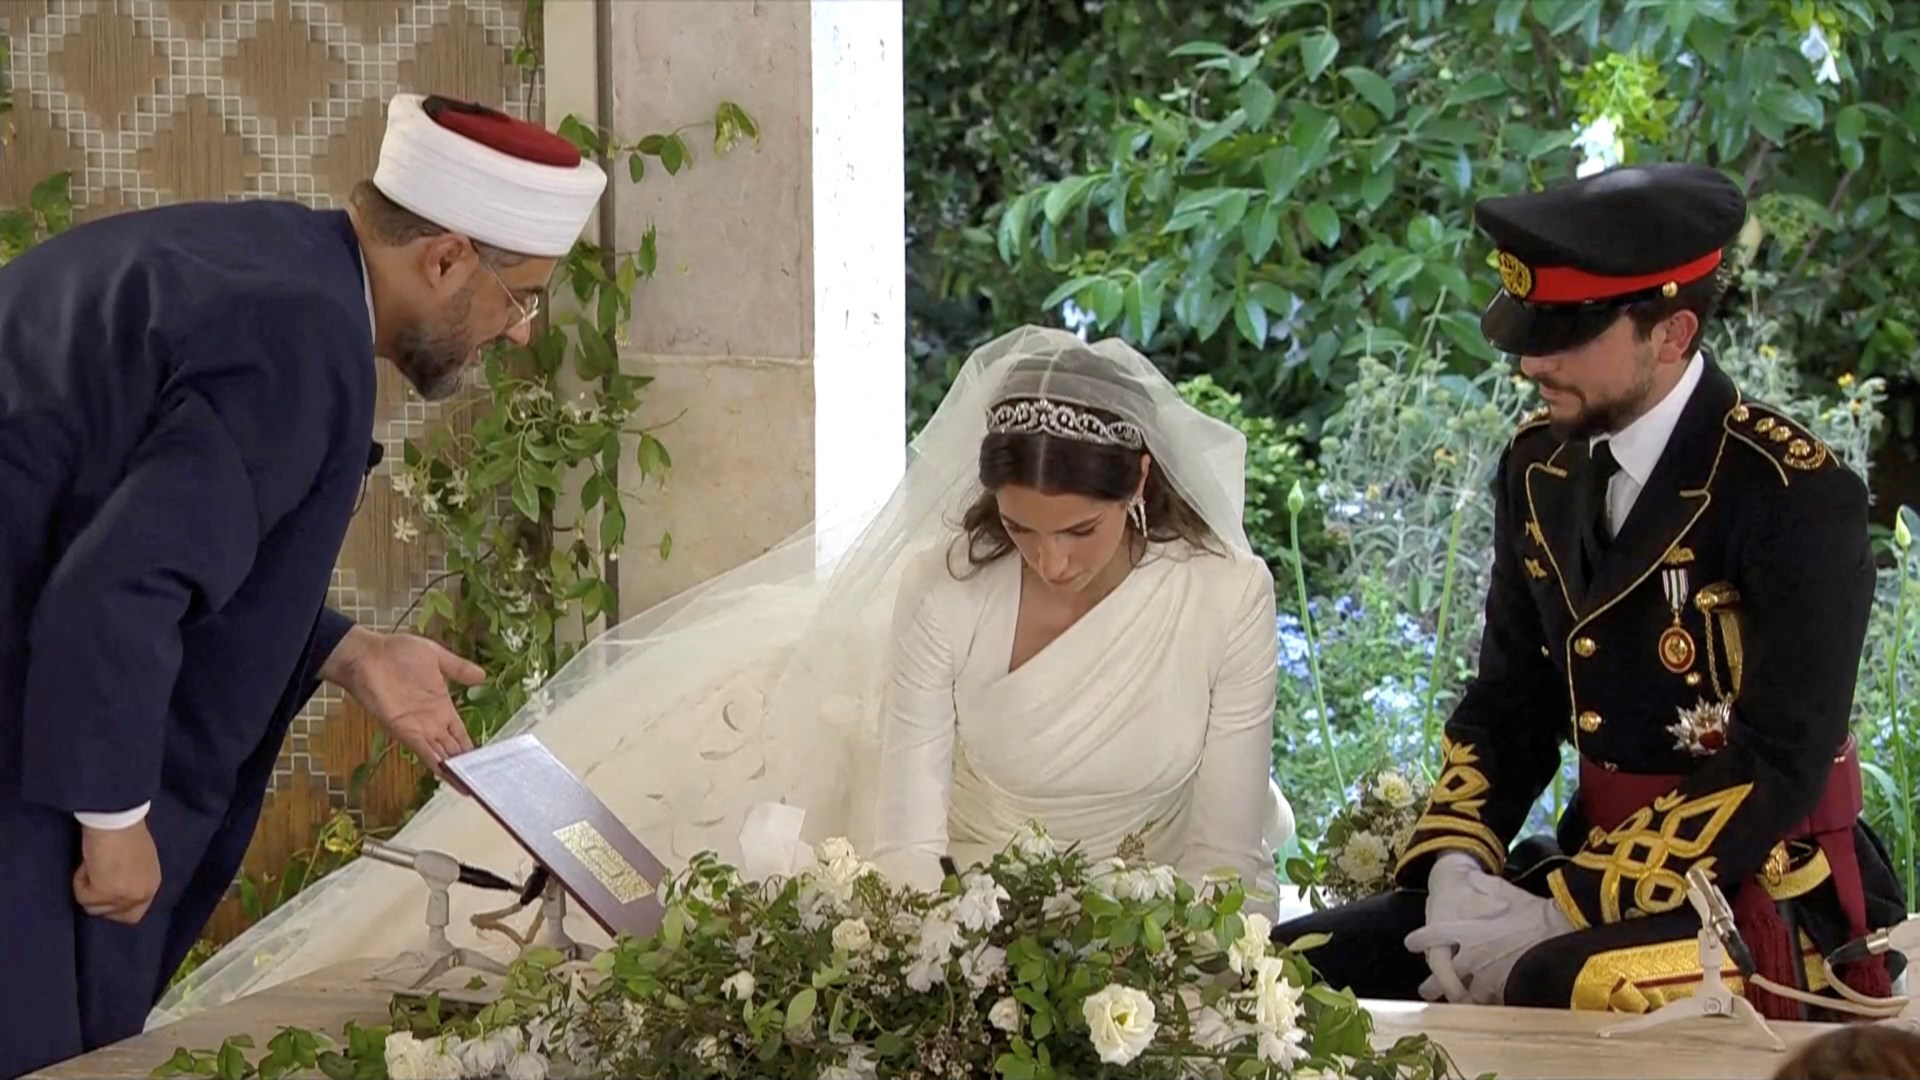 Photos: A look at Jordan's royal wedding | Gallery News | Al Jazeera